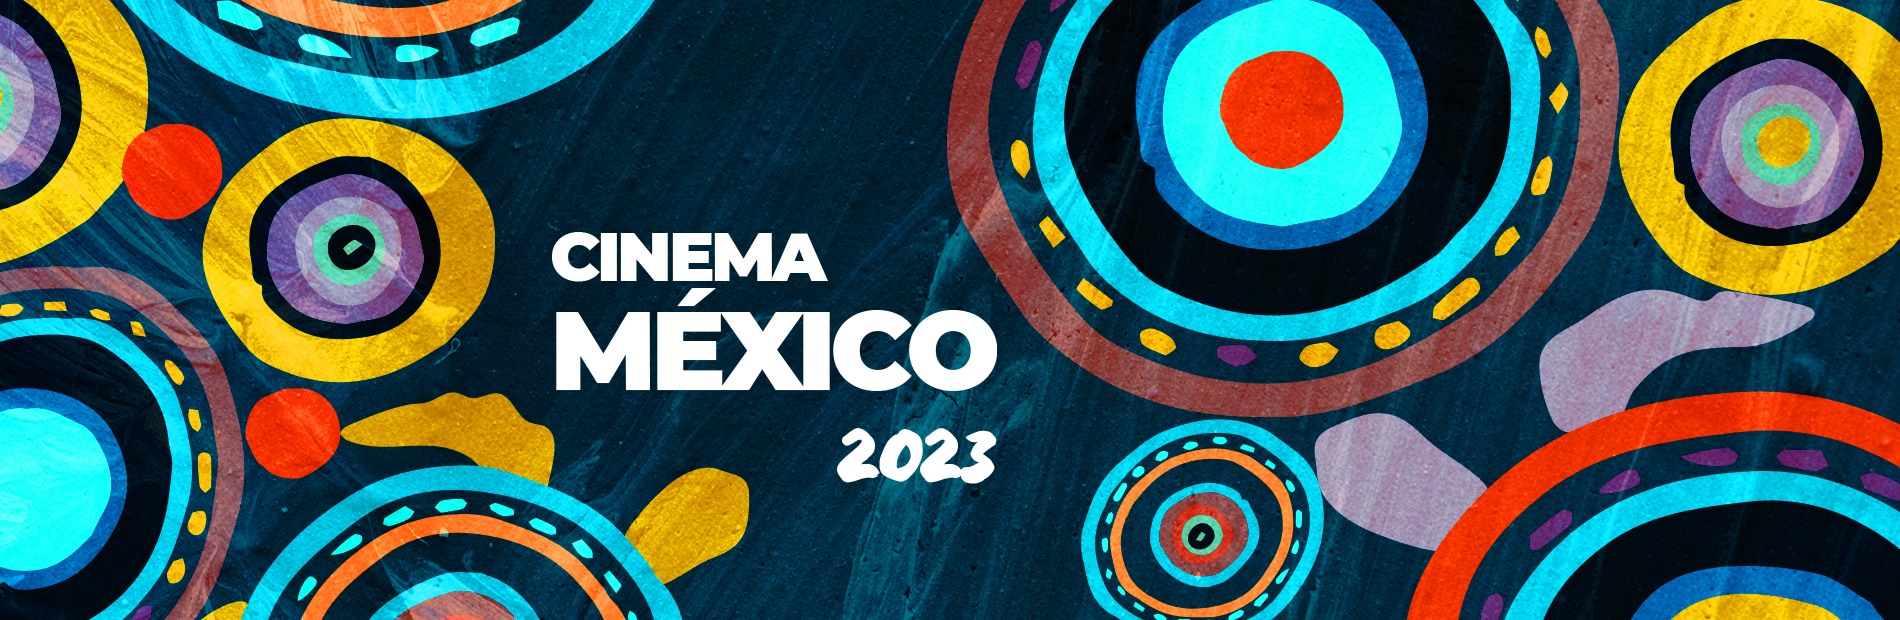 Cinema México 2023